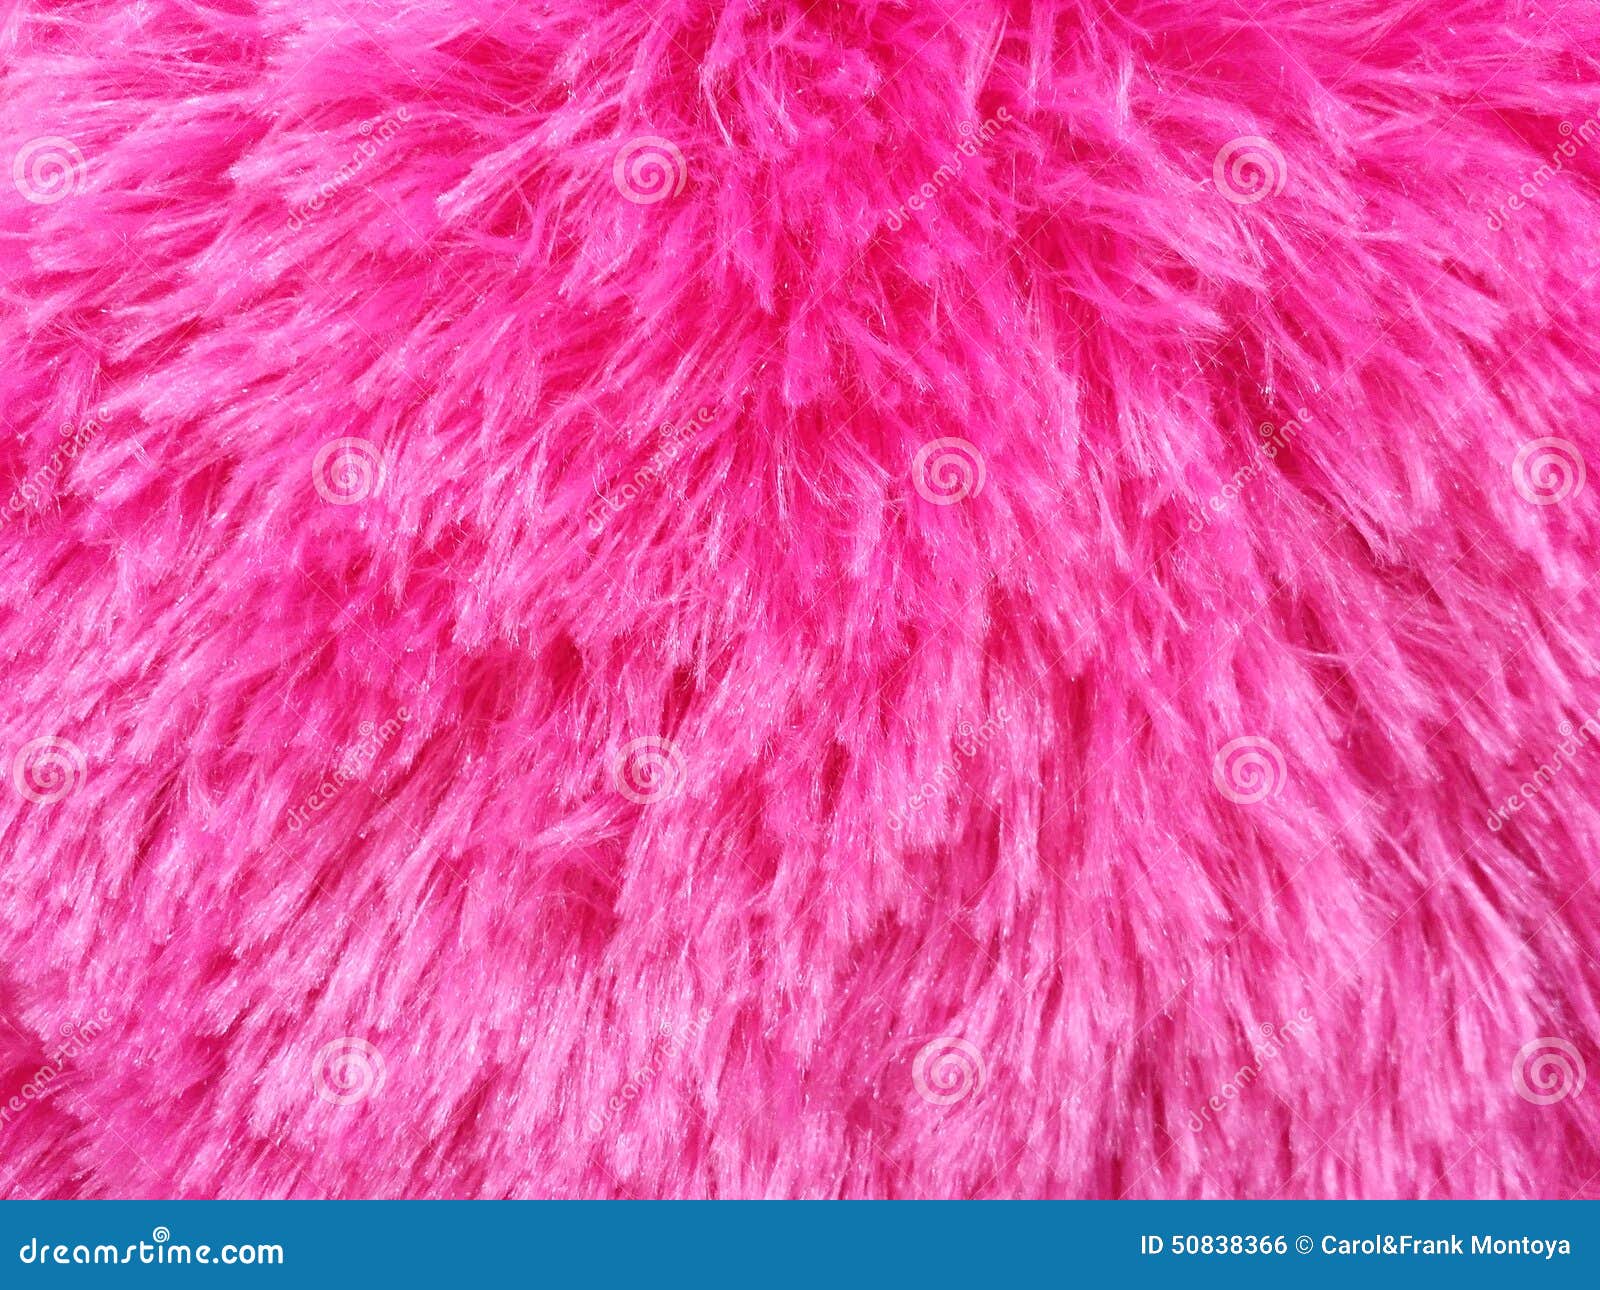 Fuzzy Pink Rug Roselawnlutheran HD Wallpapers Download Free Map Images Wallpaper [wallpaper684.blogspot.com]